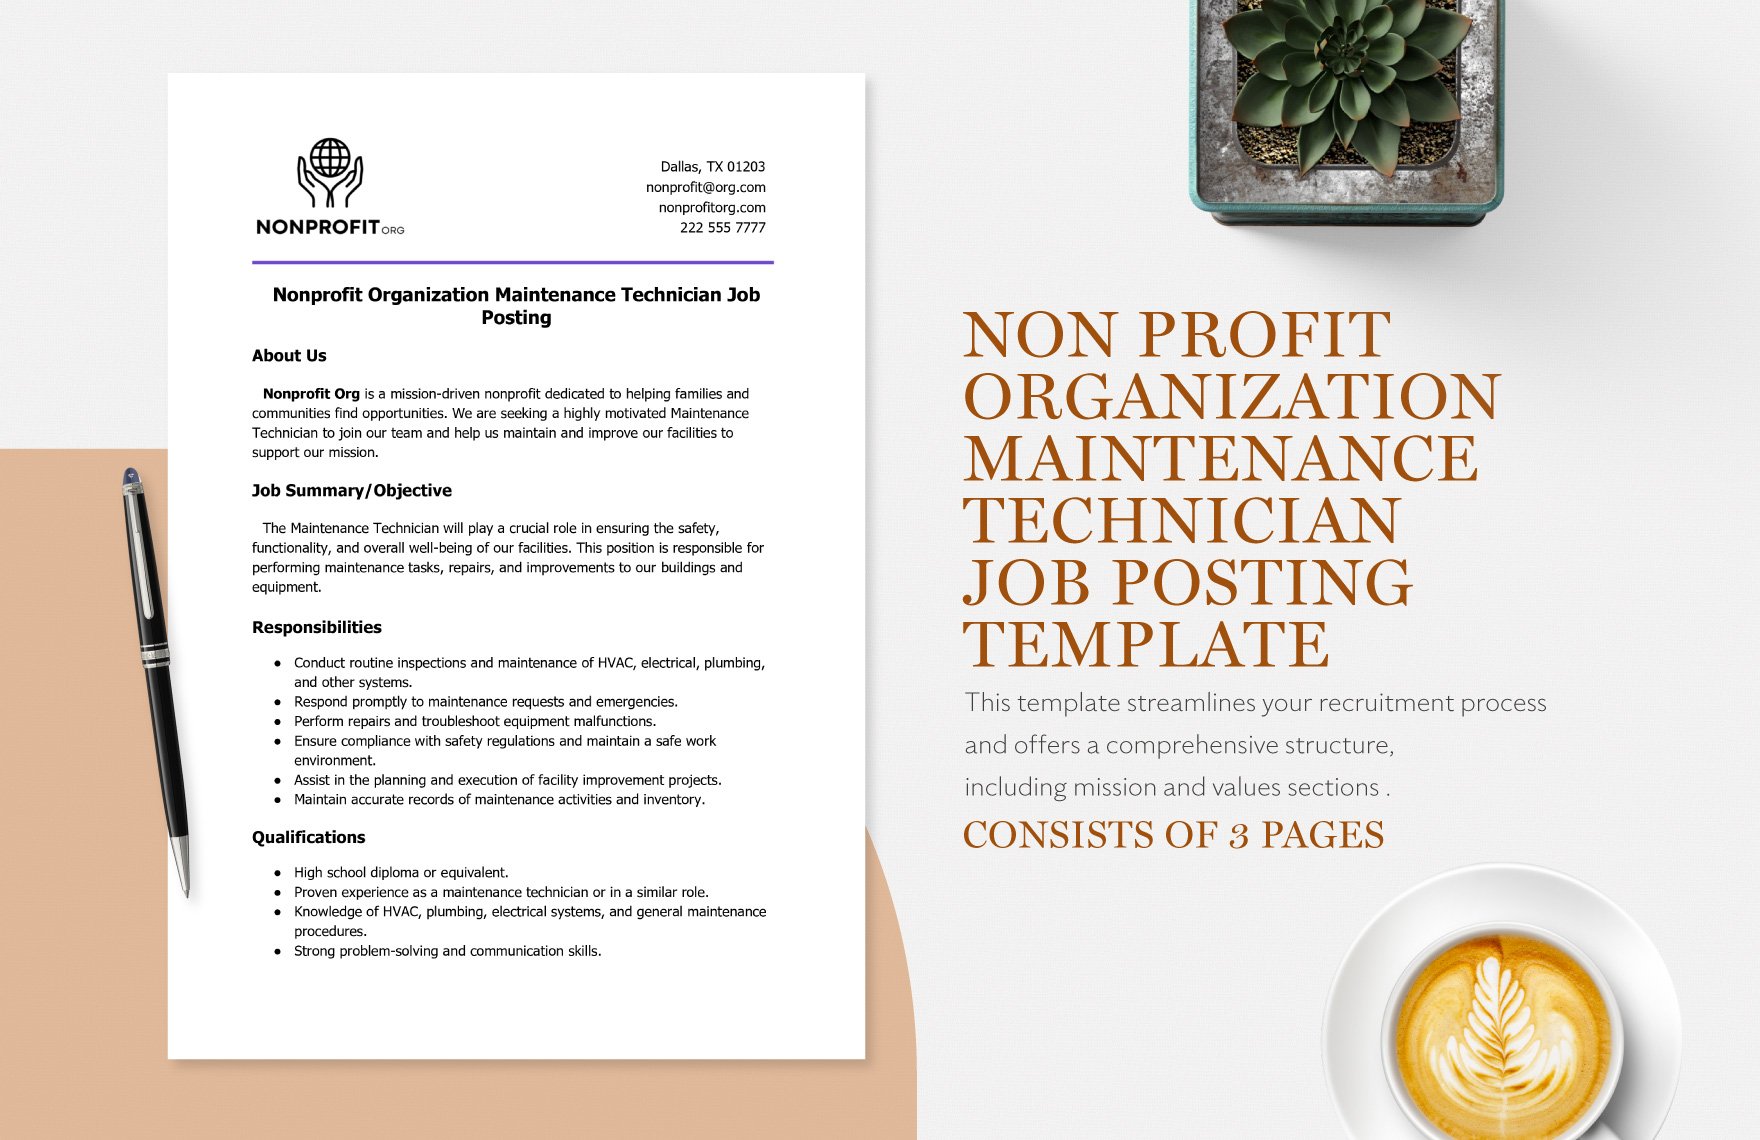 Nonprofit Organization Maintenance Technician Job Posting Template